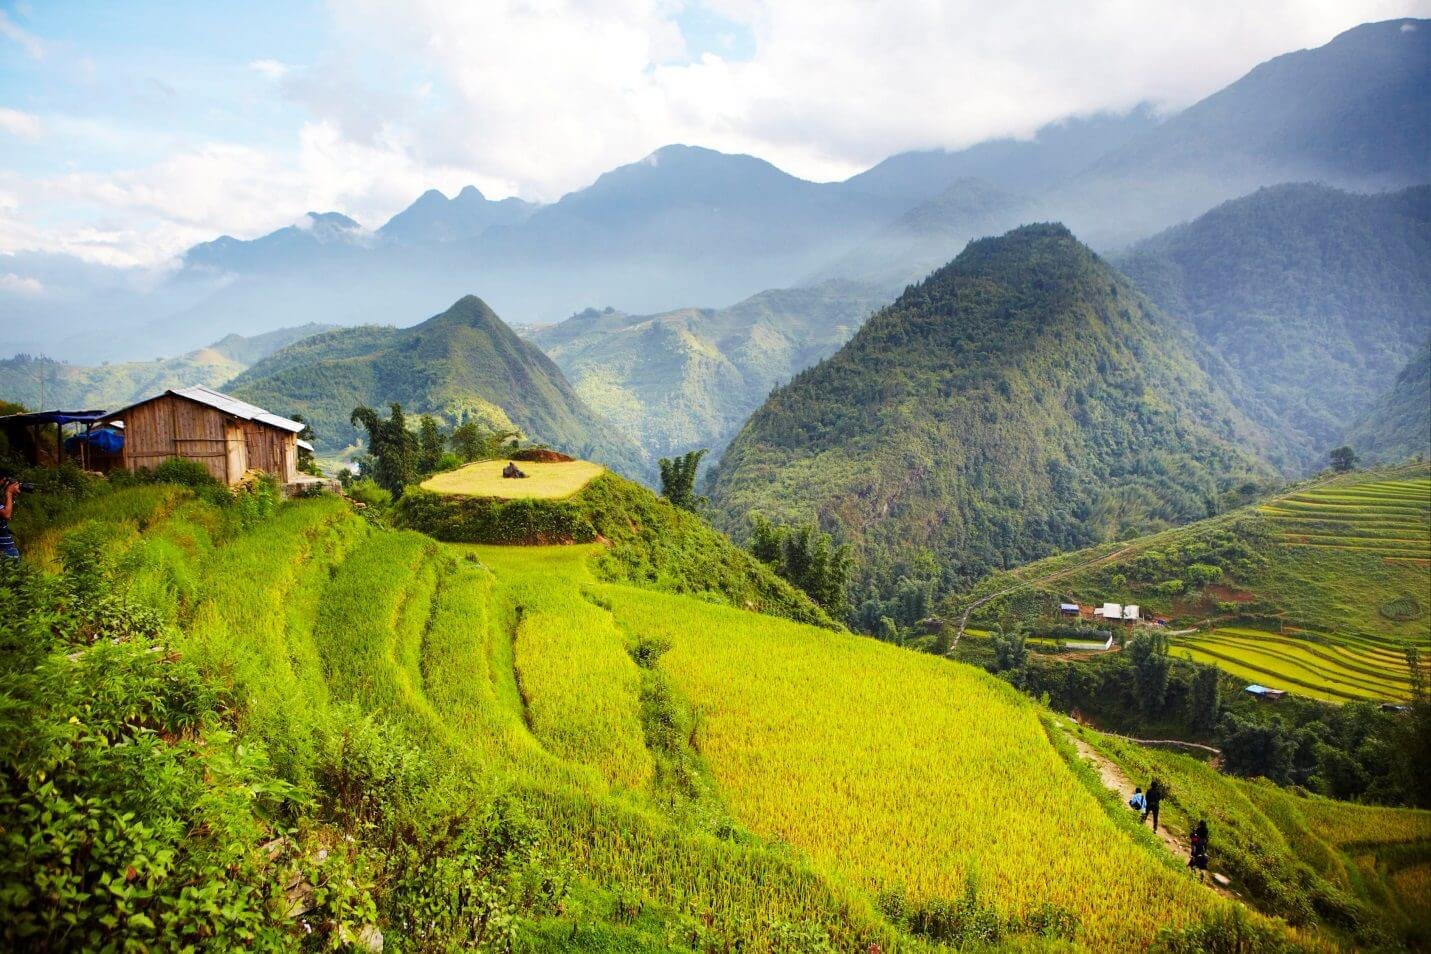 Top 10 Best Tourist Attractions To Visit In Vietnam